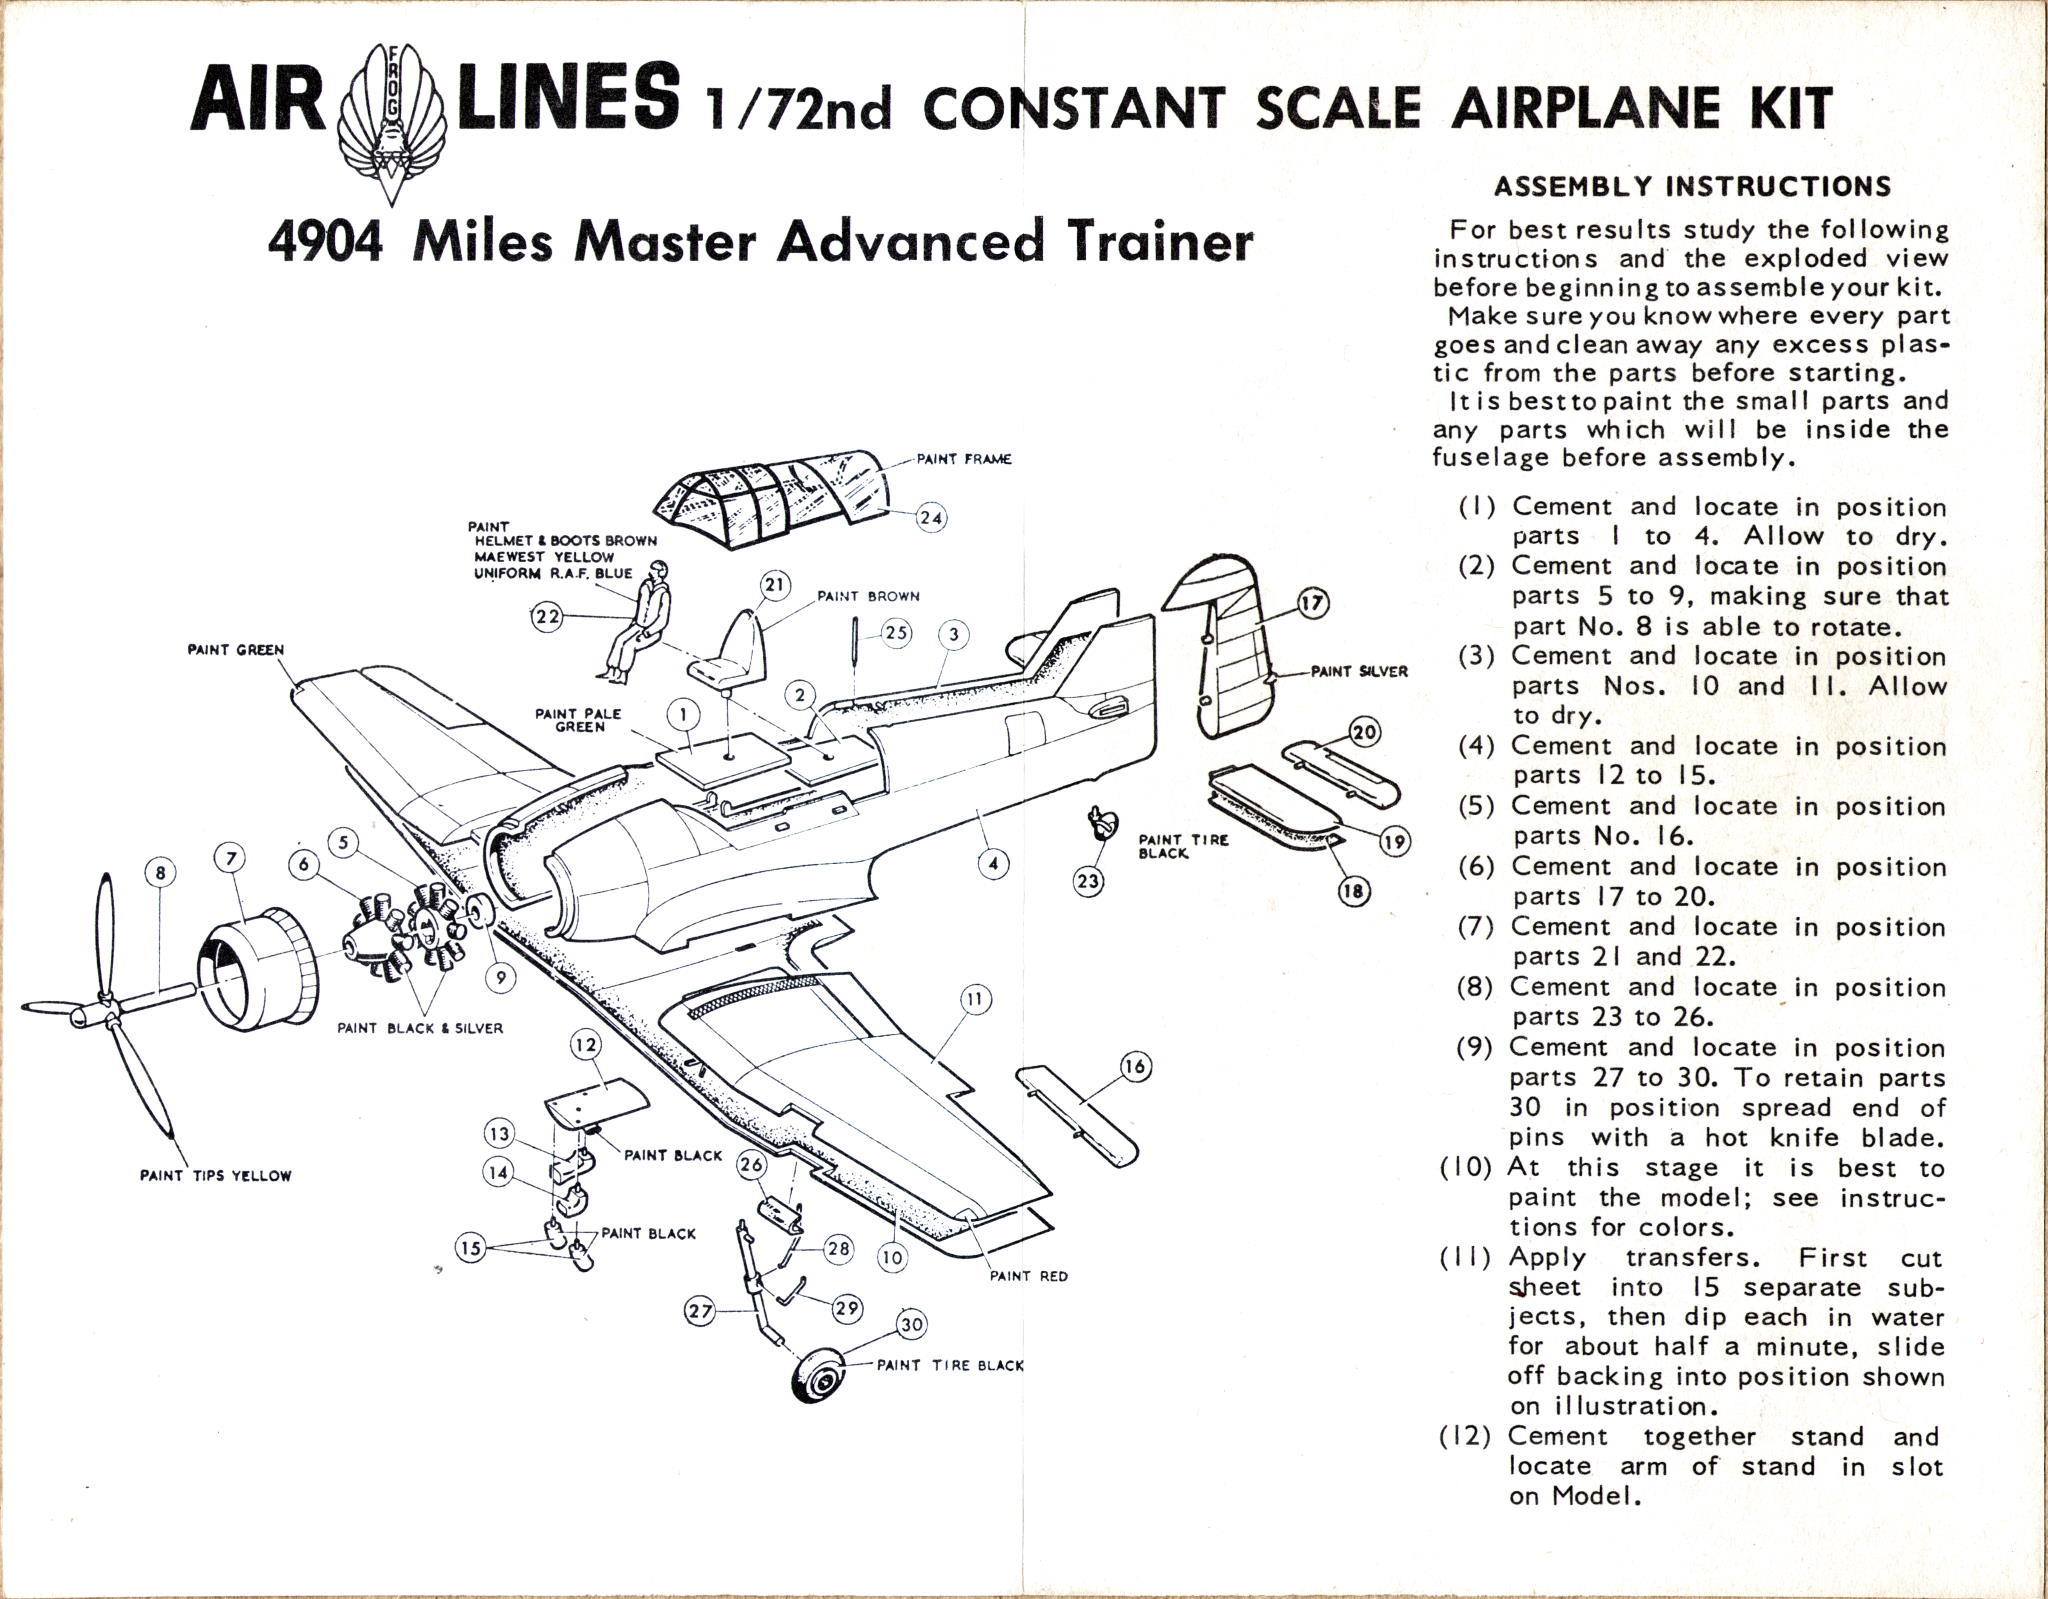 4904 Air Lines Miles Master, инструкция по сборке, 1964